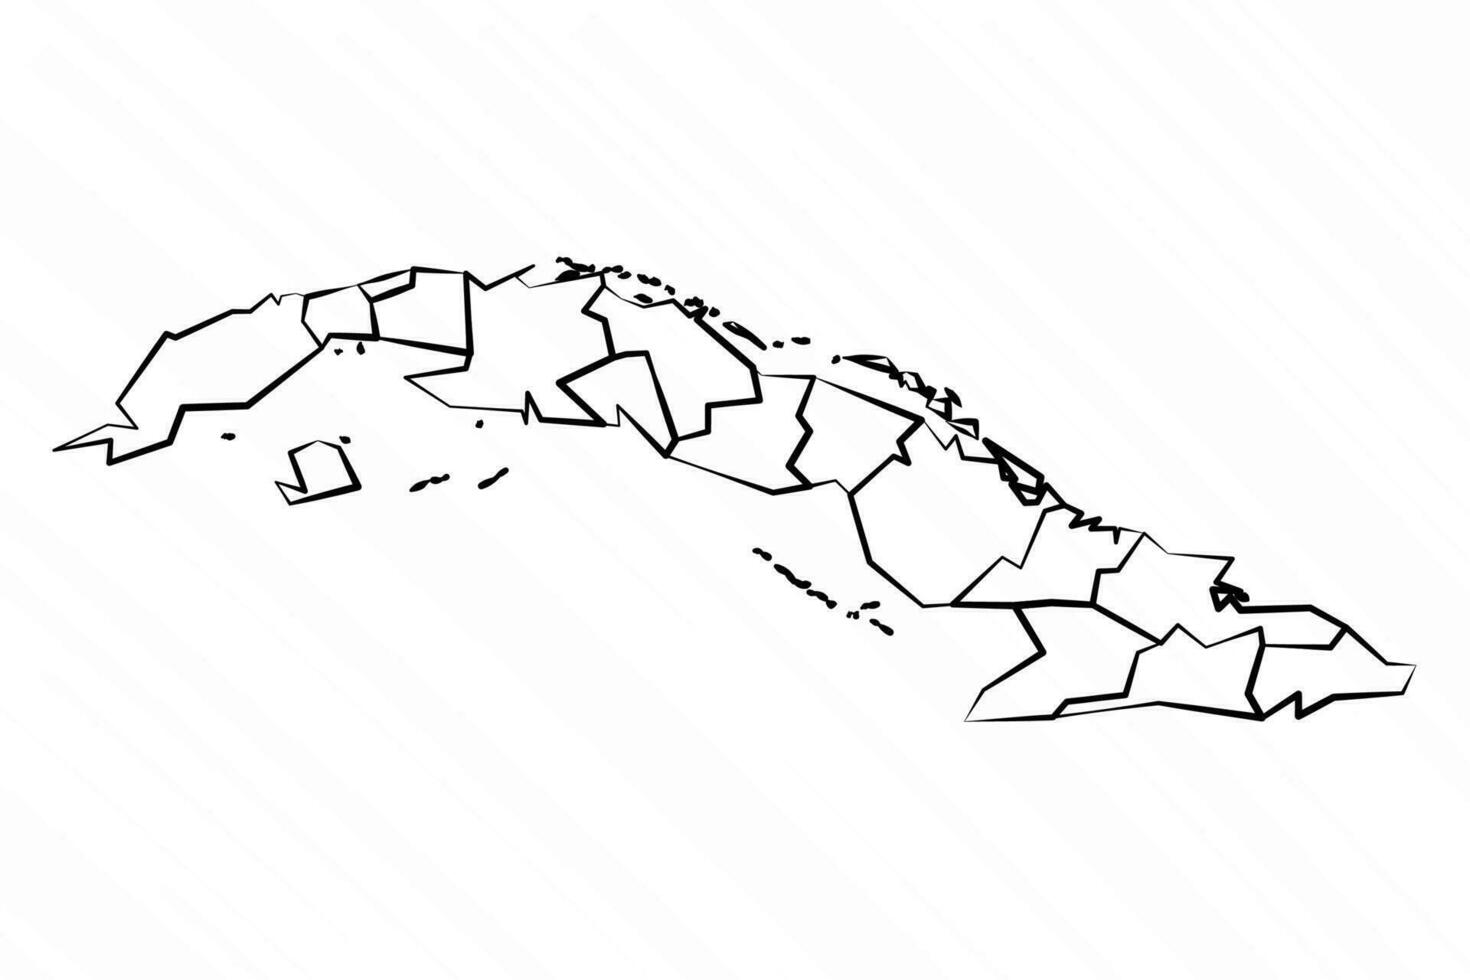 Hand Drawn Cuba Map Illustration vector